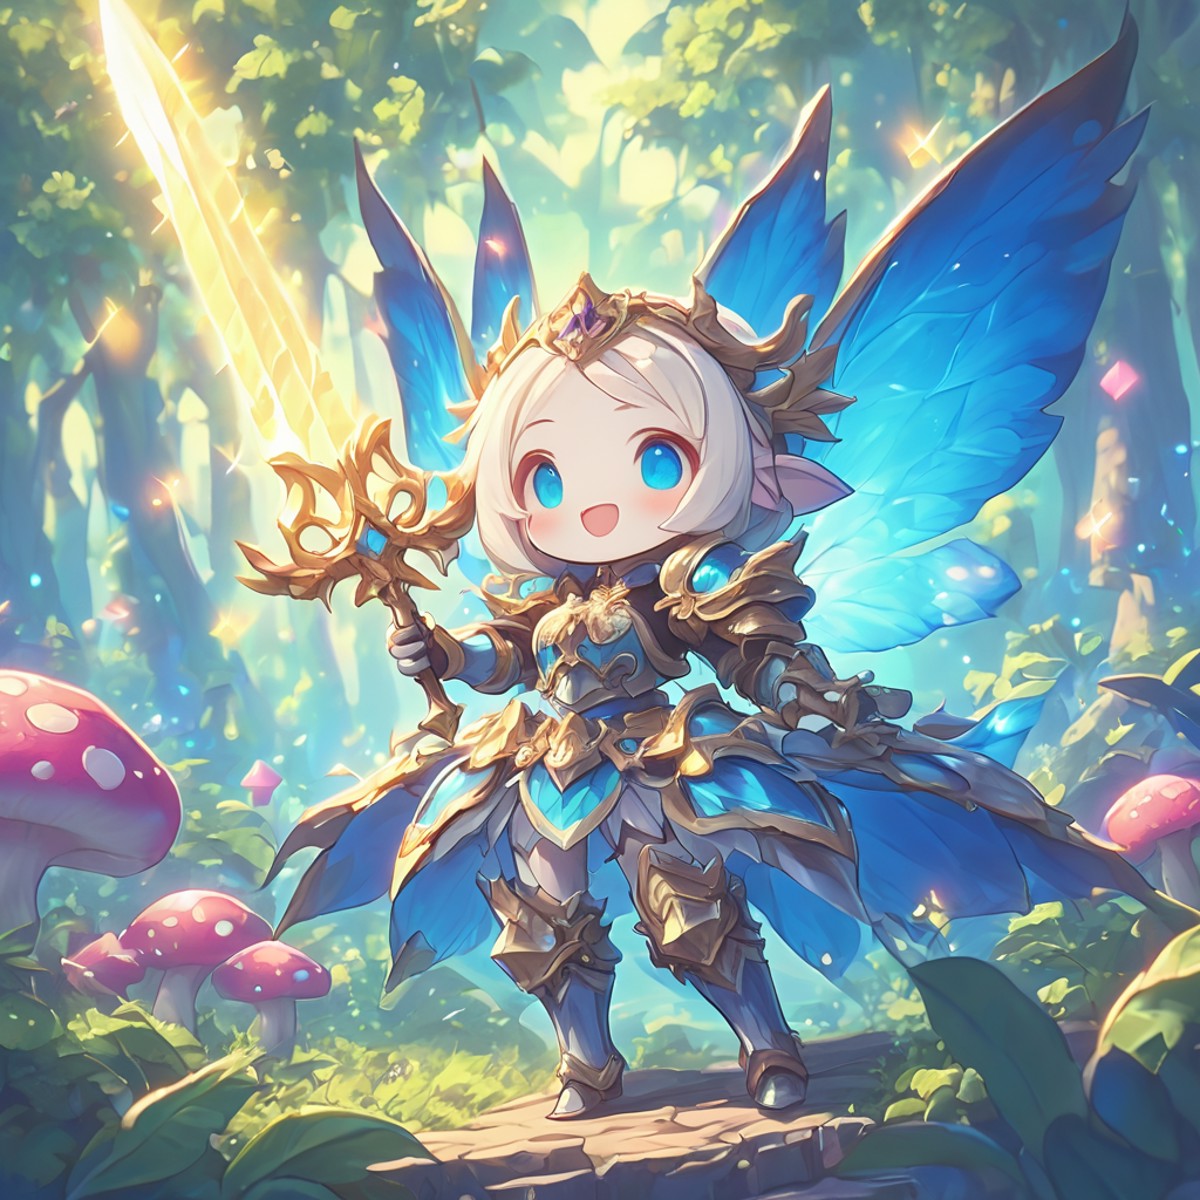 a super cute female  chibi knight fairy, beautiful fairy wings, colorful, wearing armor, wielding a glowing sword, magical...